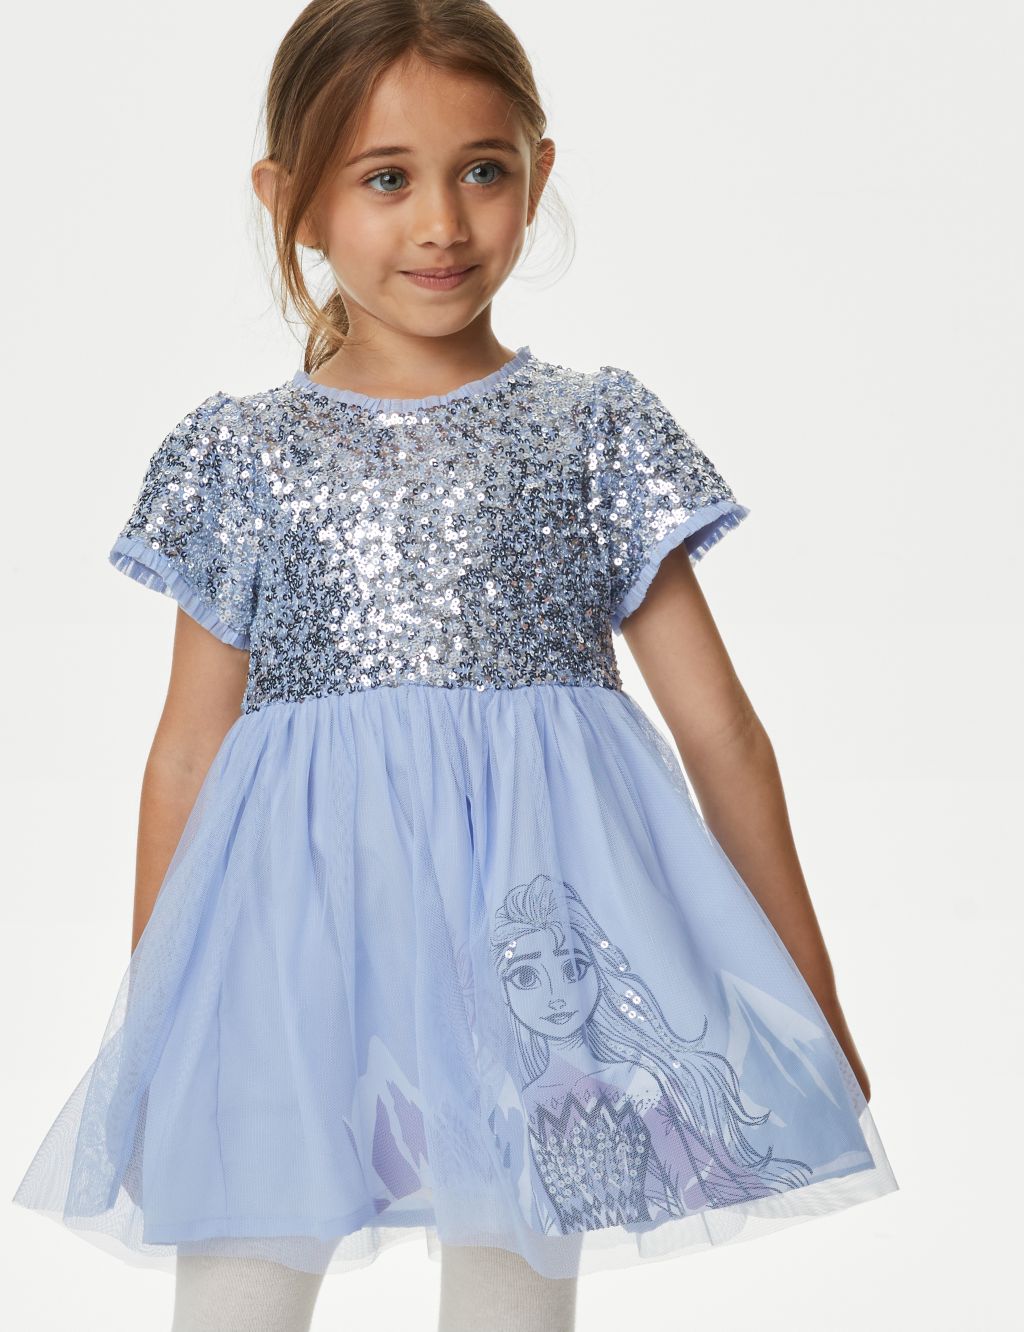 Disney Frozen™ Sequin Tulle Dress (2-8 Yrs) image 1